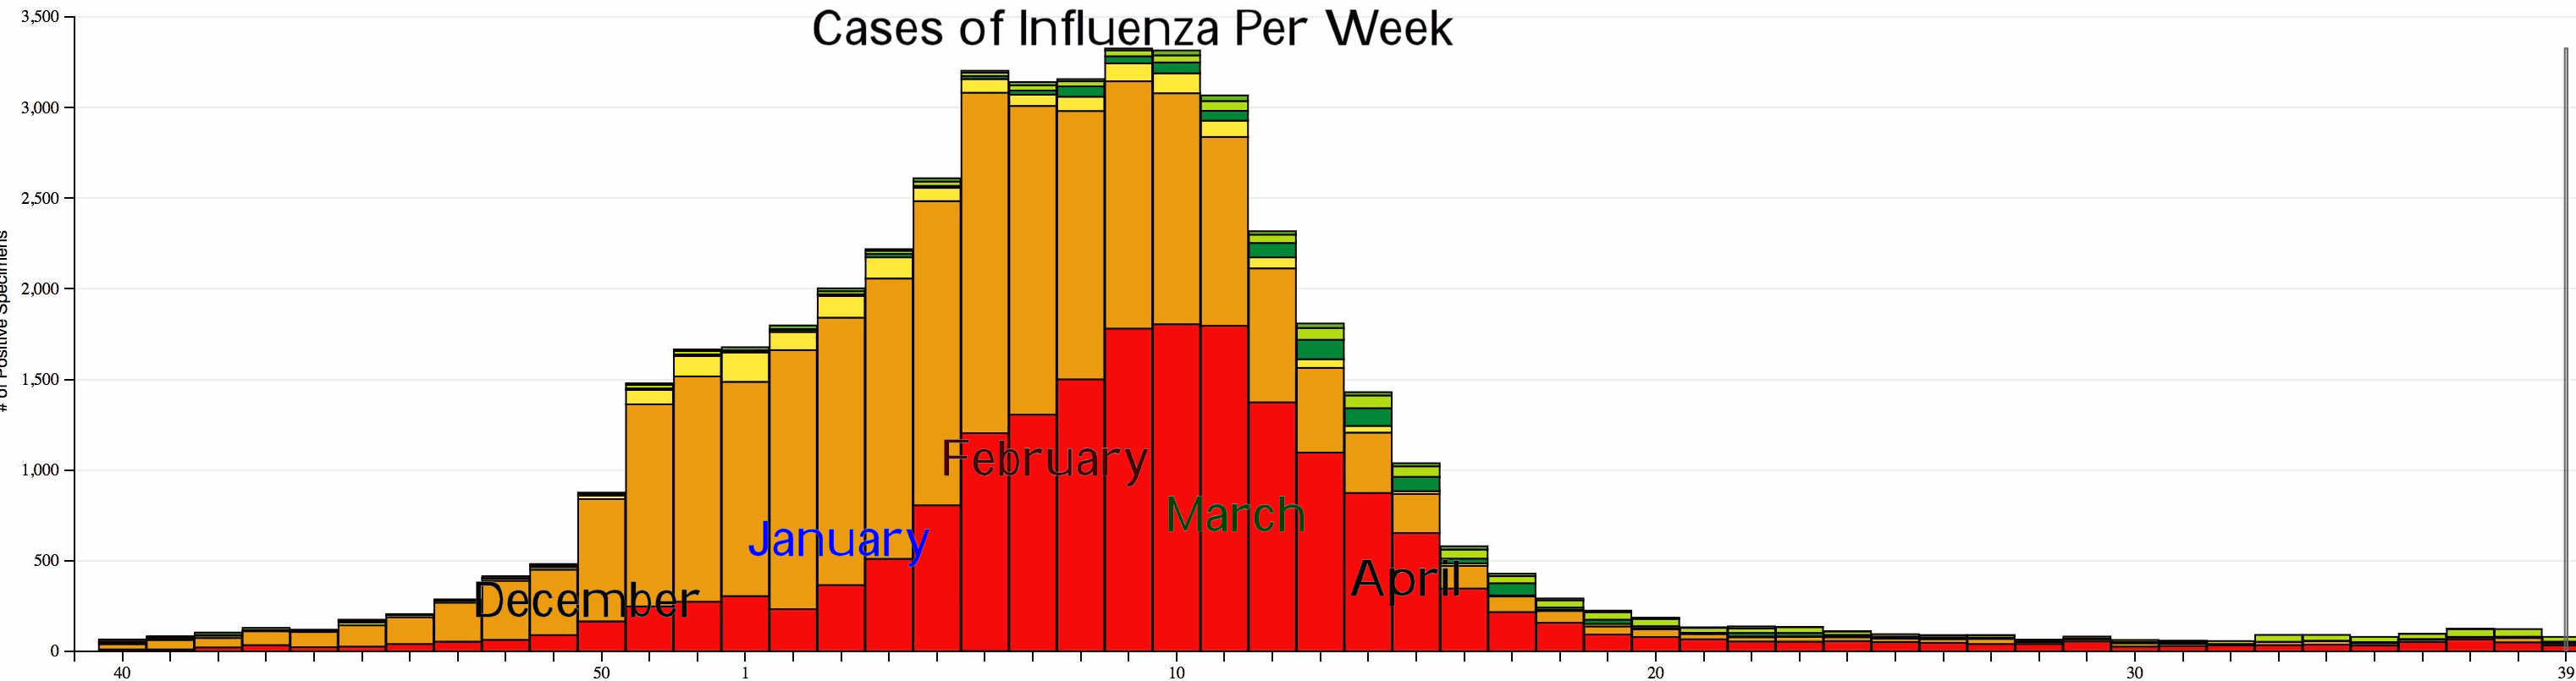 cases of influenza per week